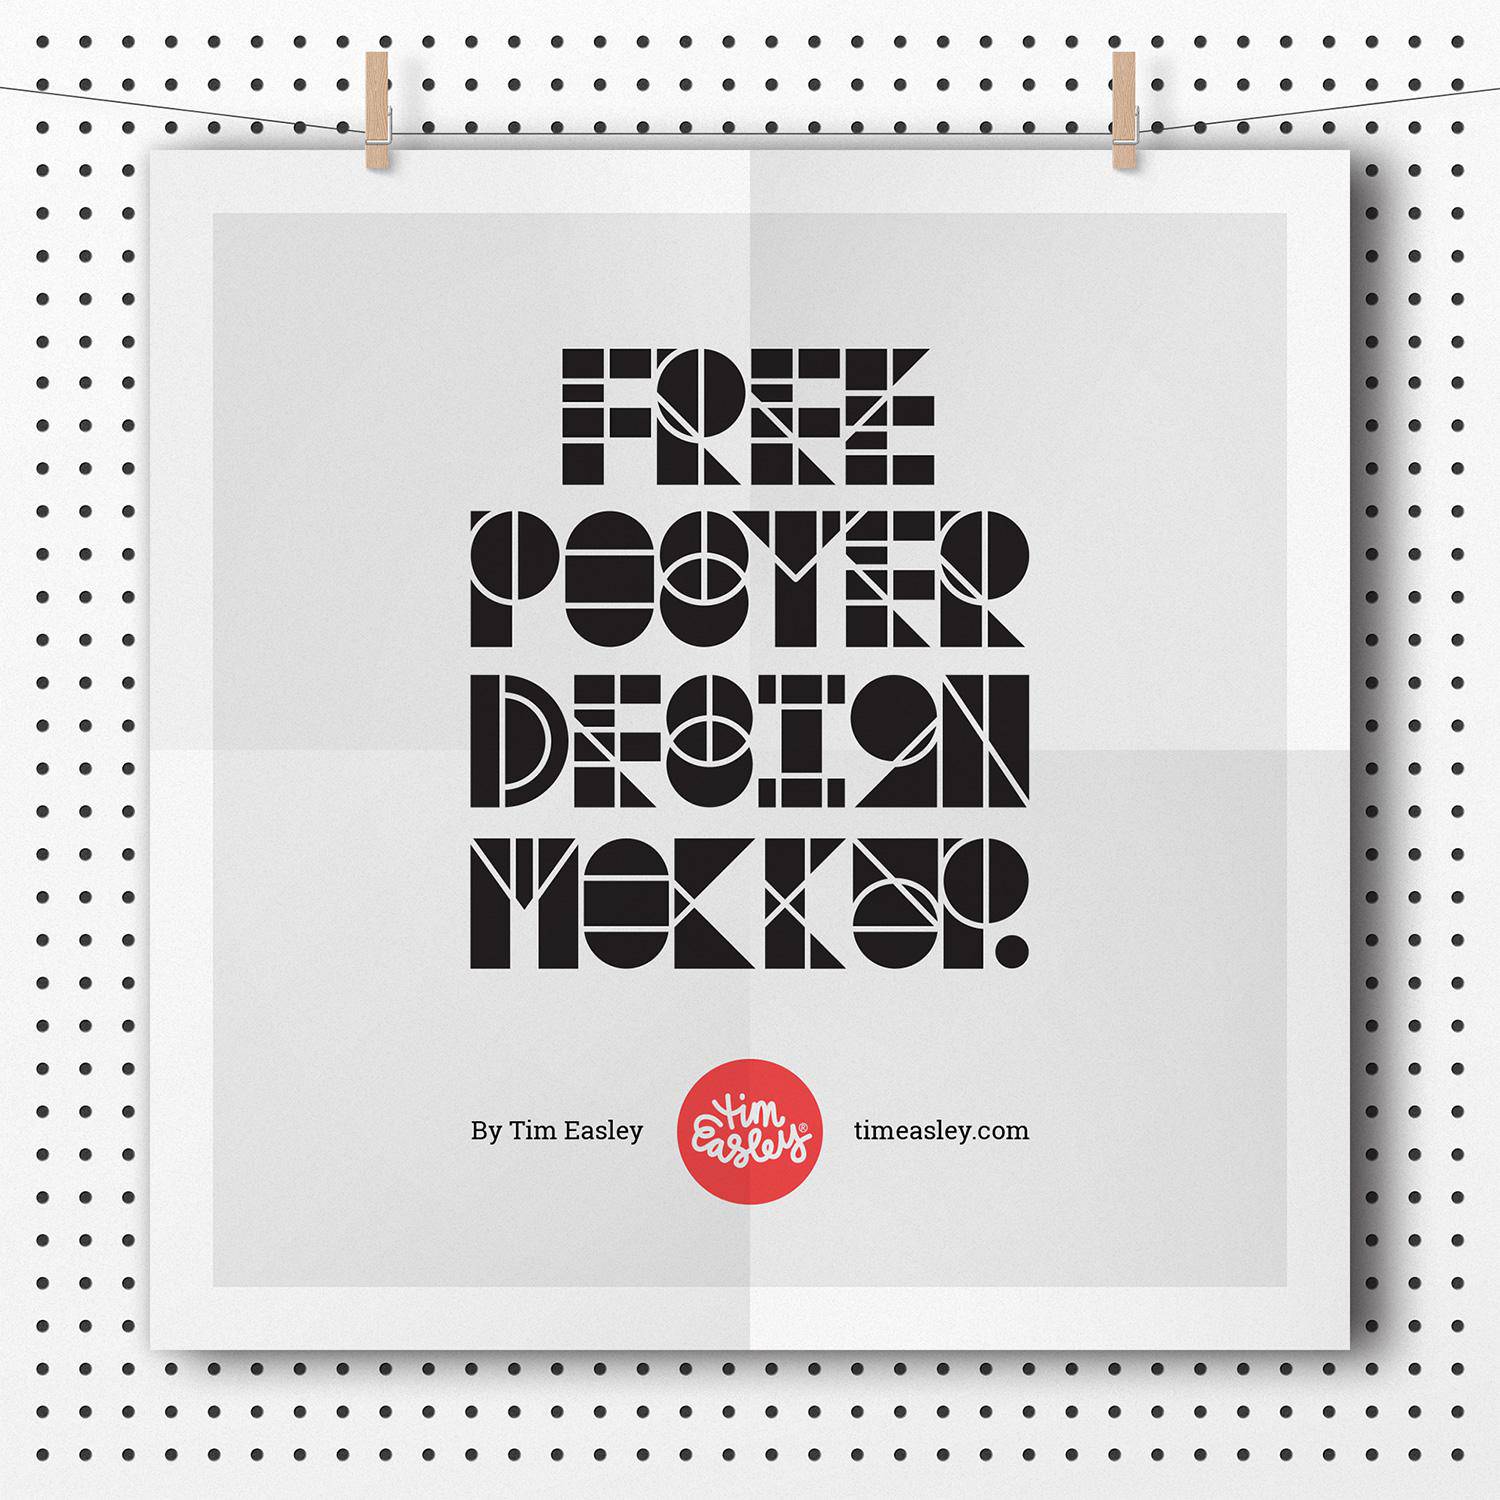 Free-Poster-Design-Mockup-8